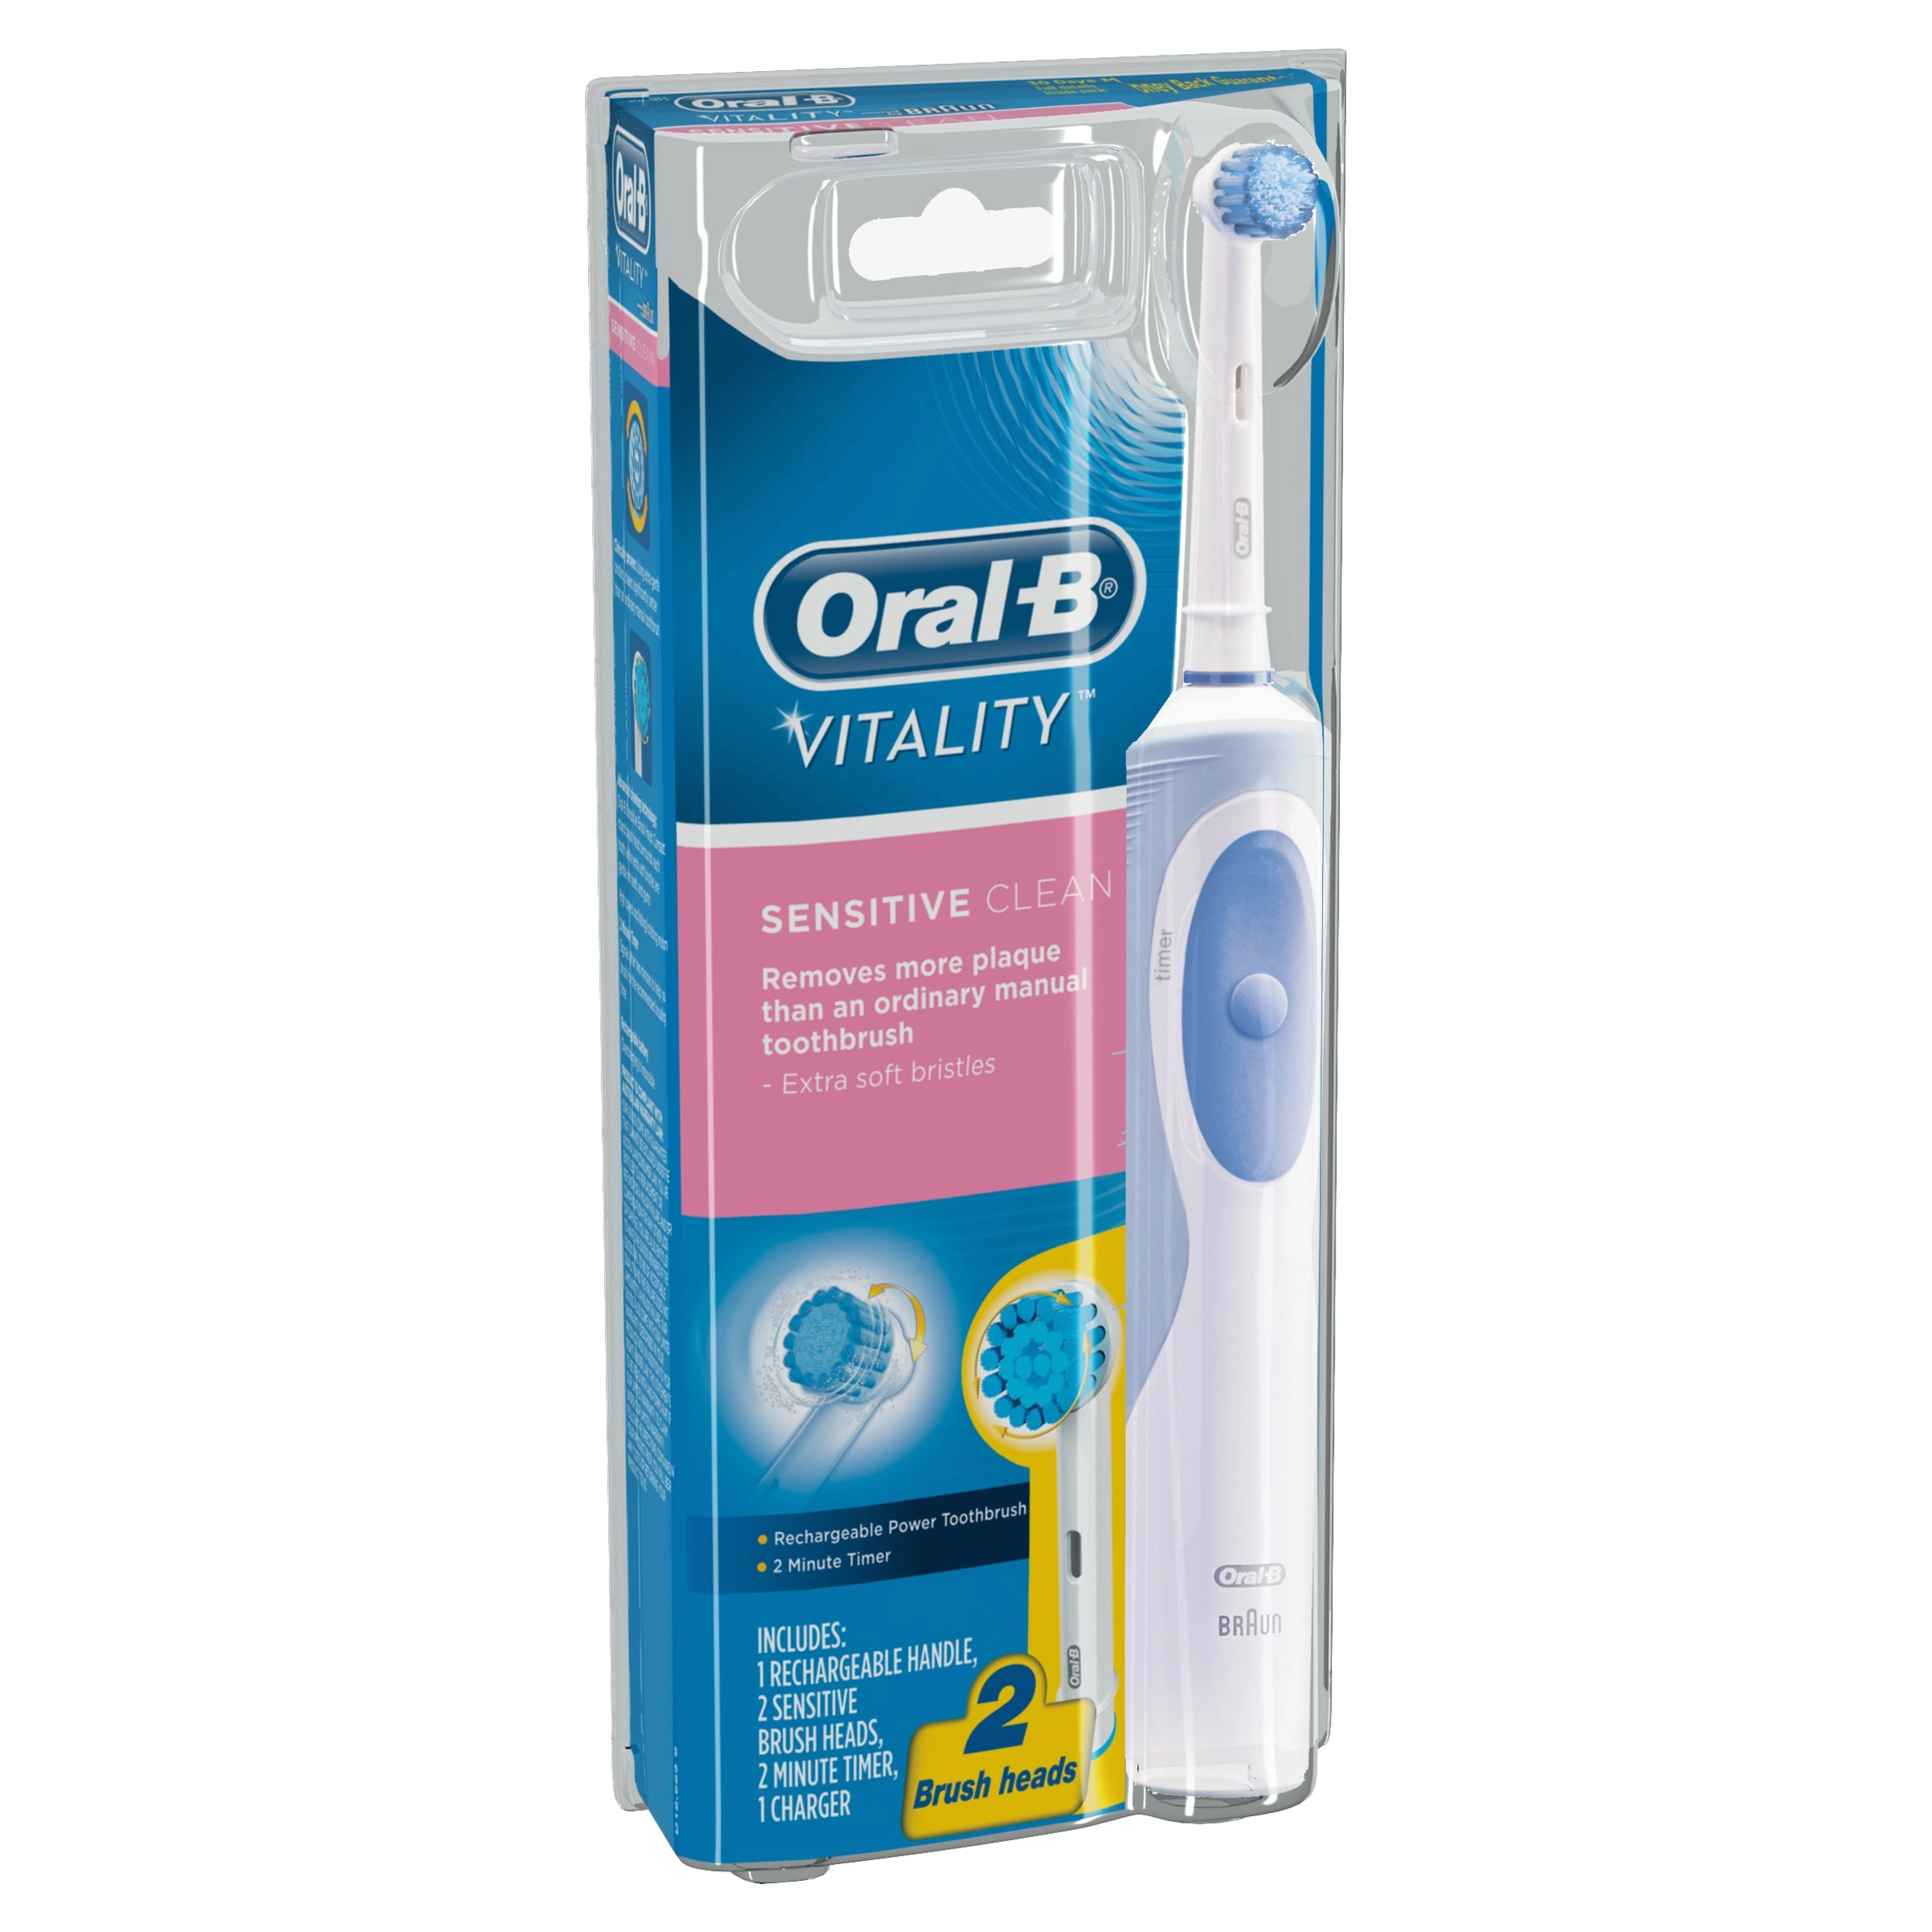 ral-B Vitality Sensitive Electric Toothbrush